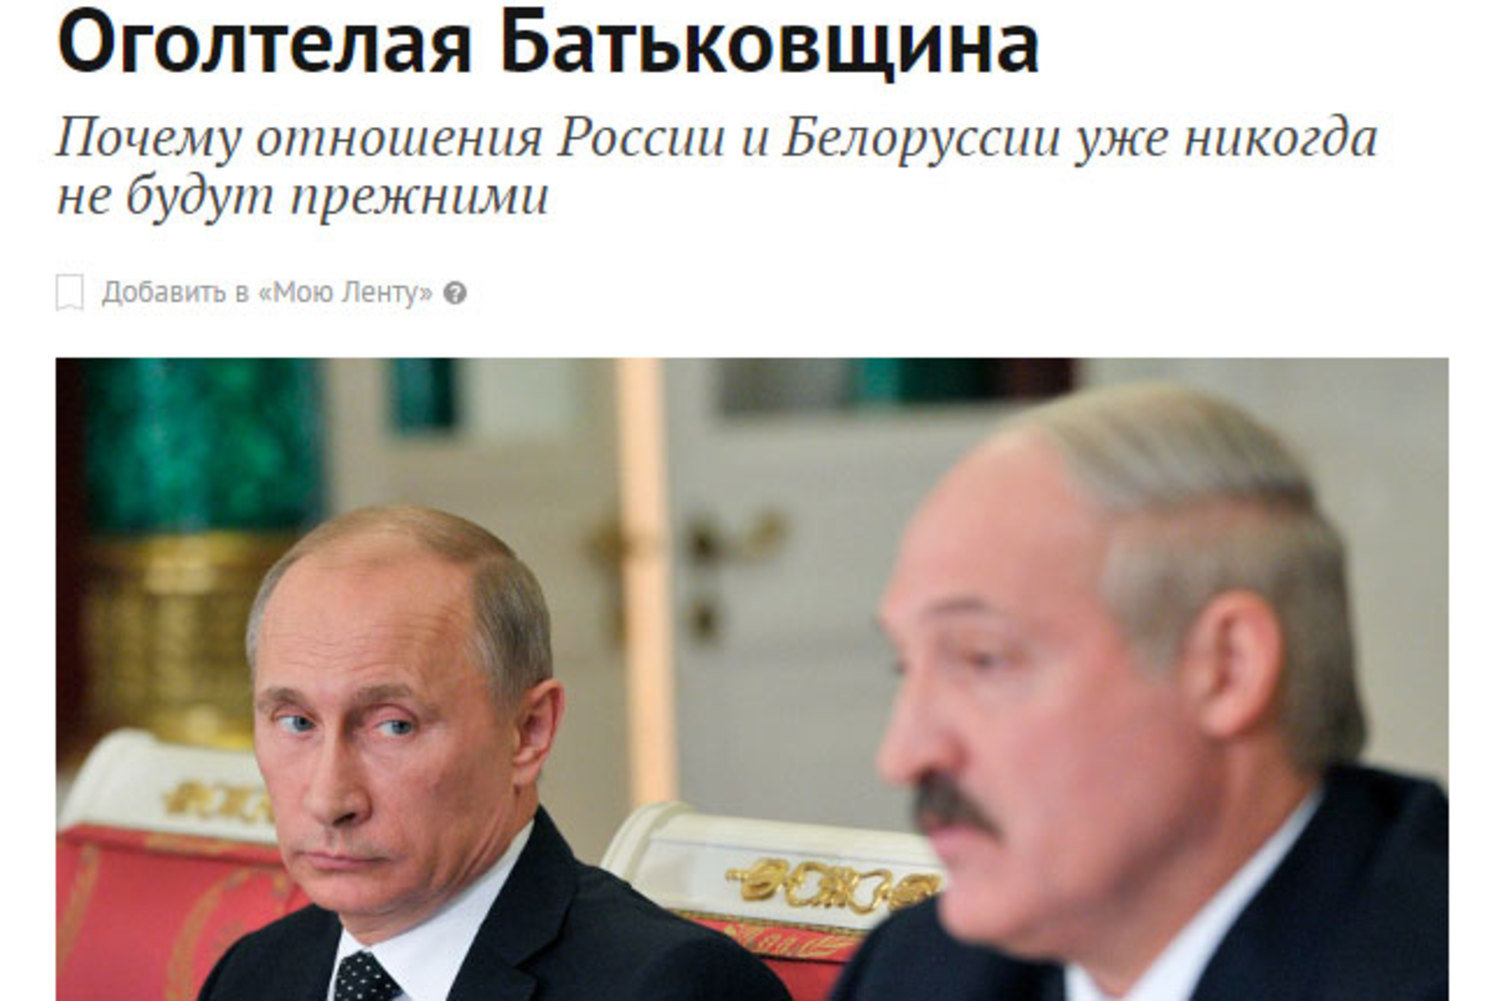 Minsk prepares to counter information pressure from Kremlin